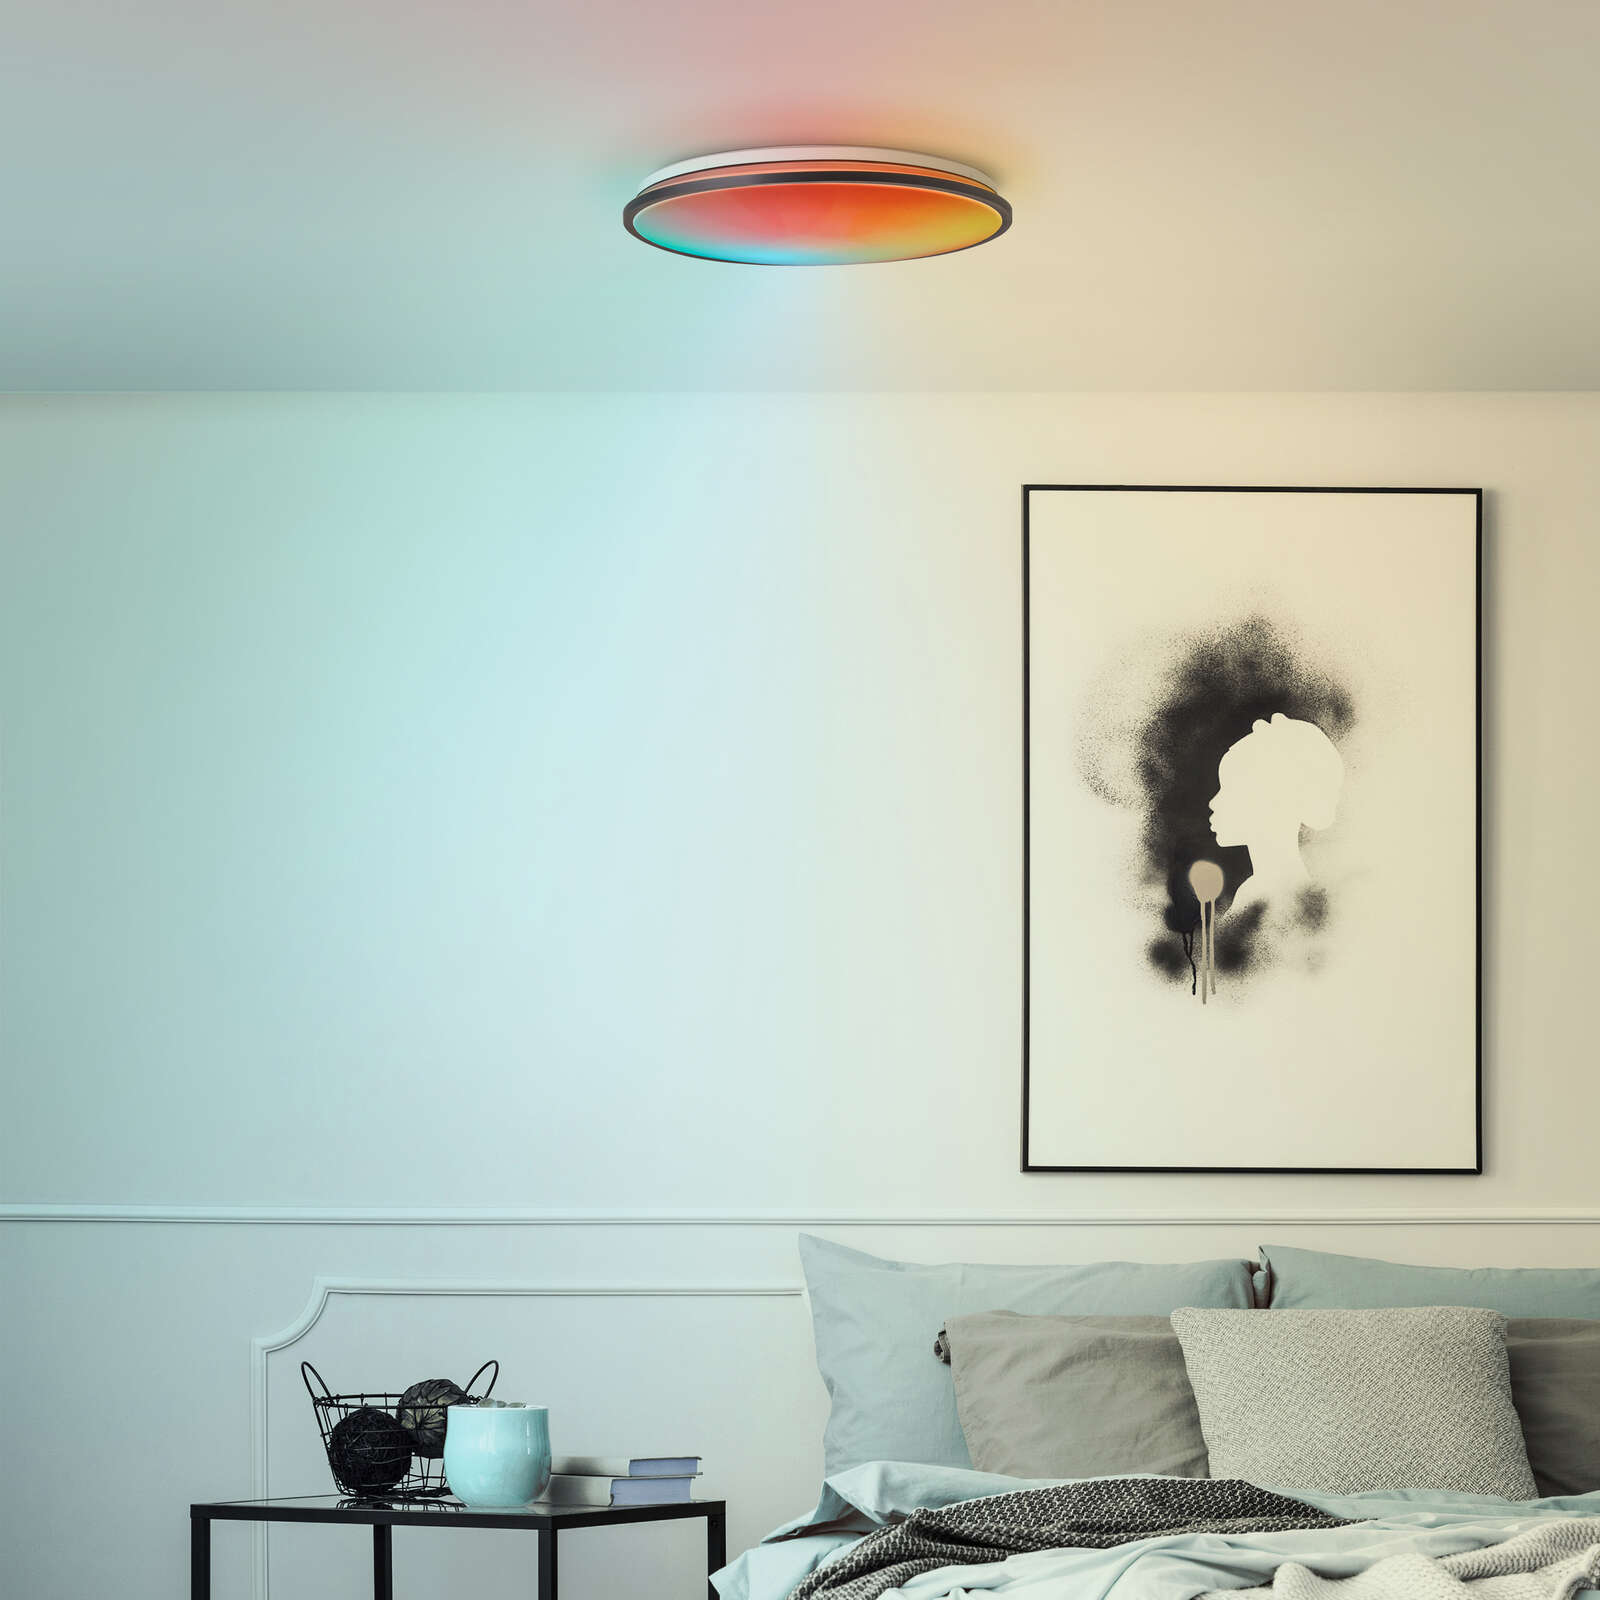             Kunststof plafondlamp - Iva 2 - Zwart
        